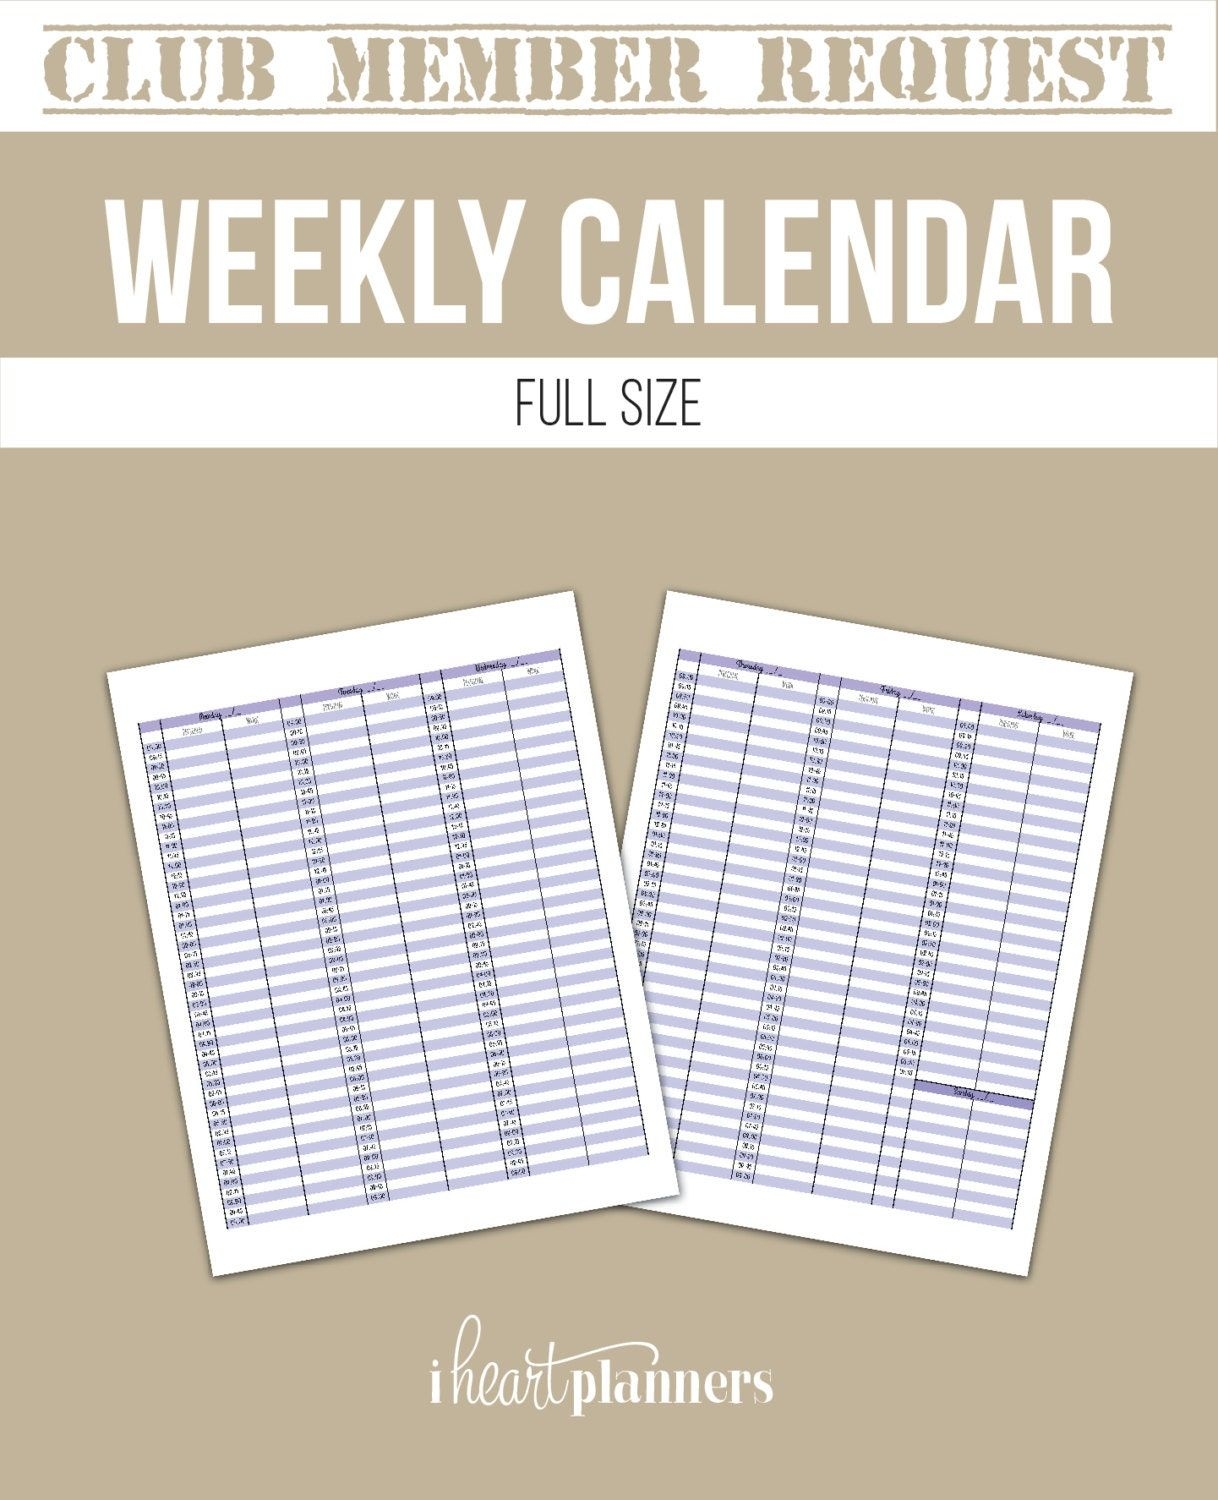 weekly calendar 15 minute increments planning